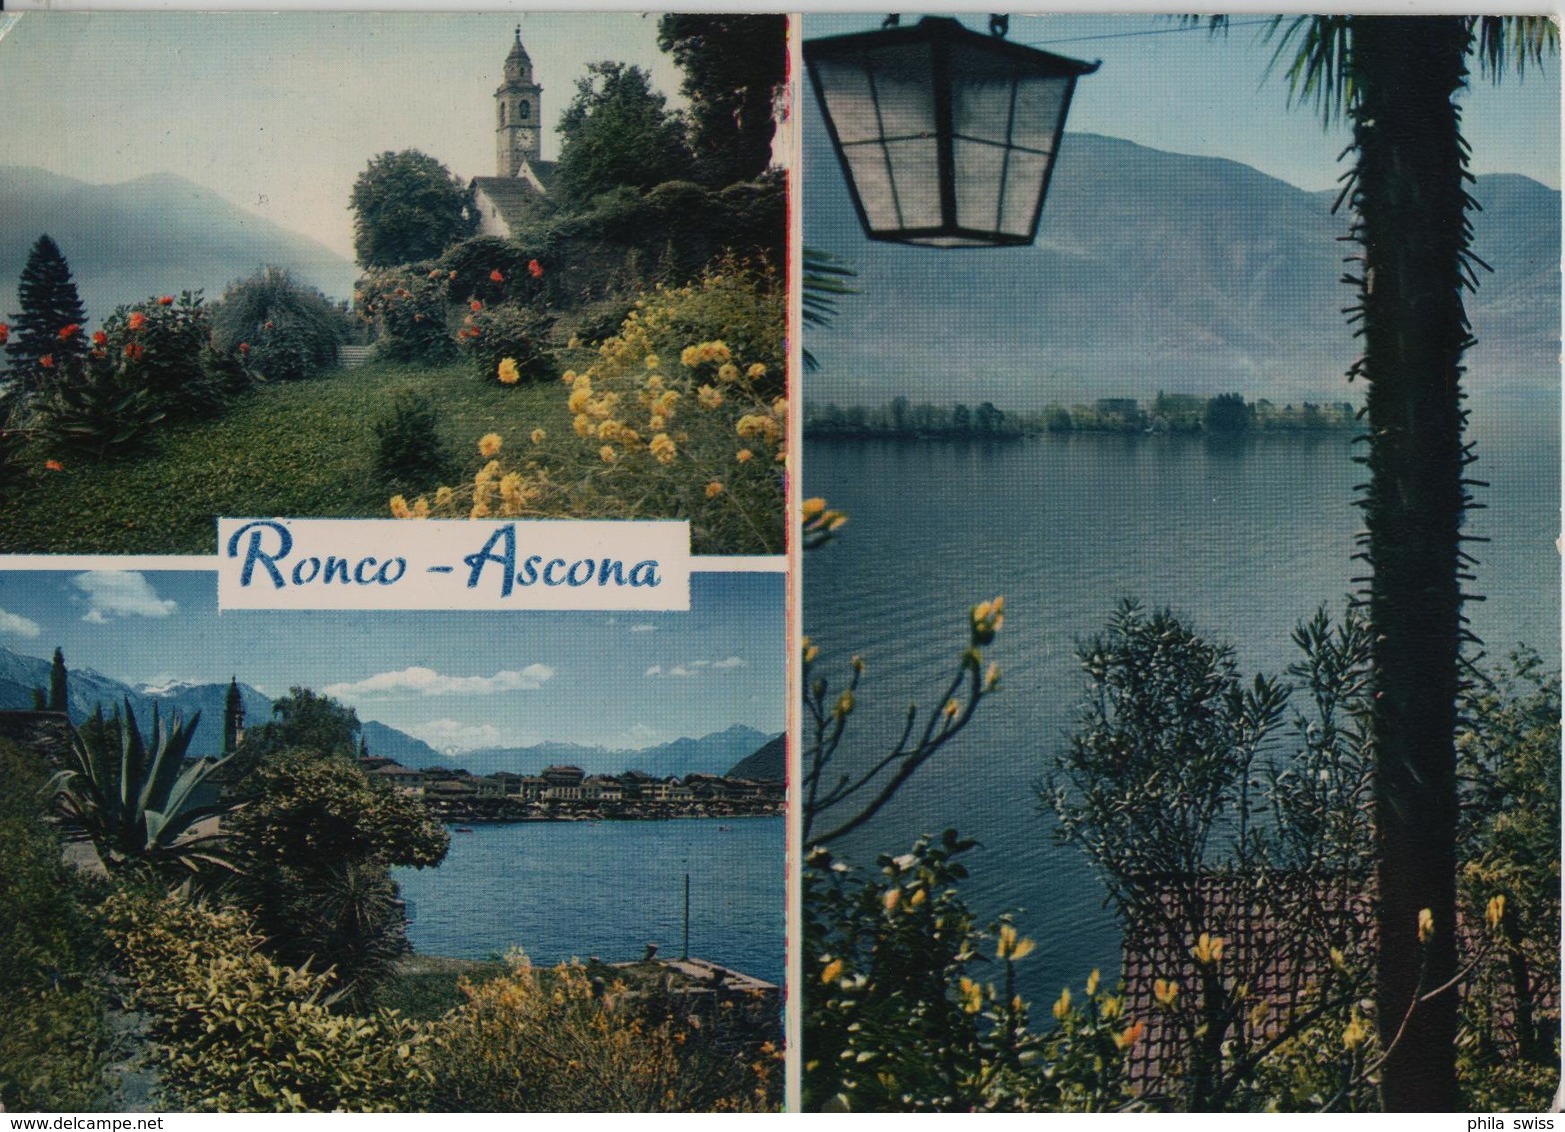 Ronco-Ascona - Multiview - Ascona